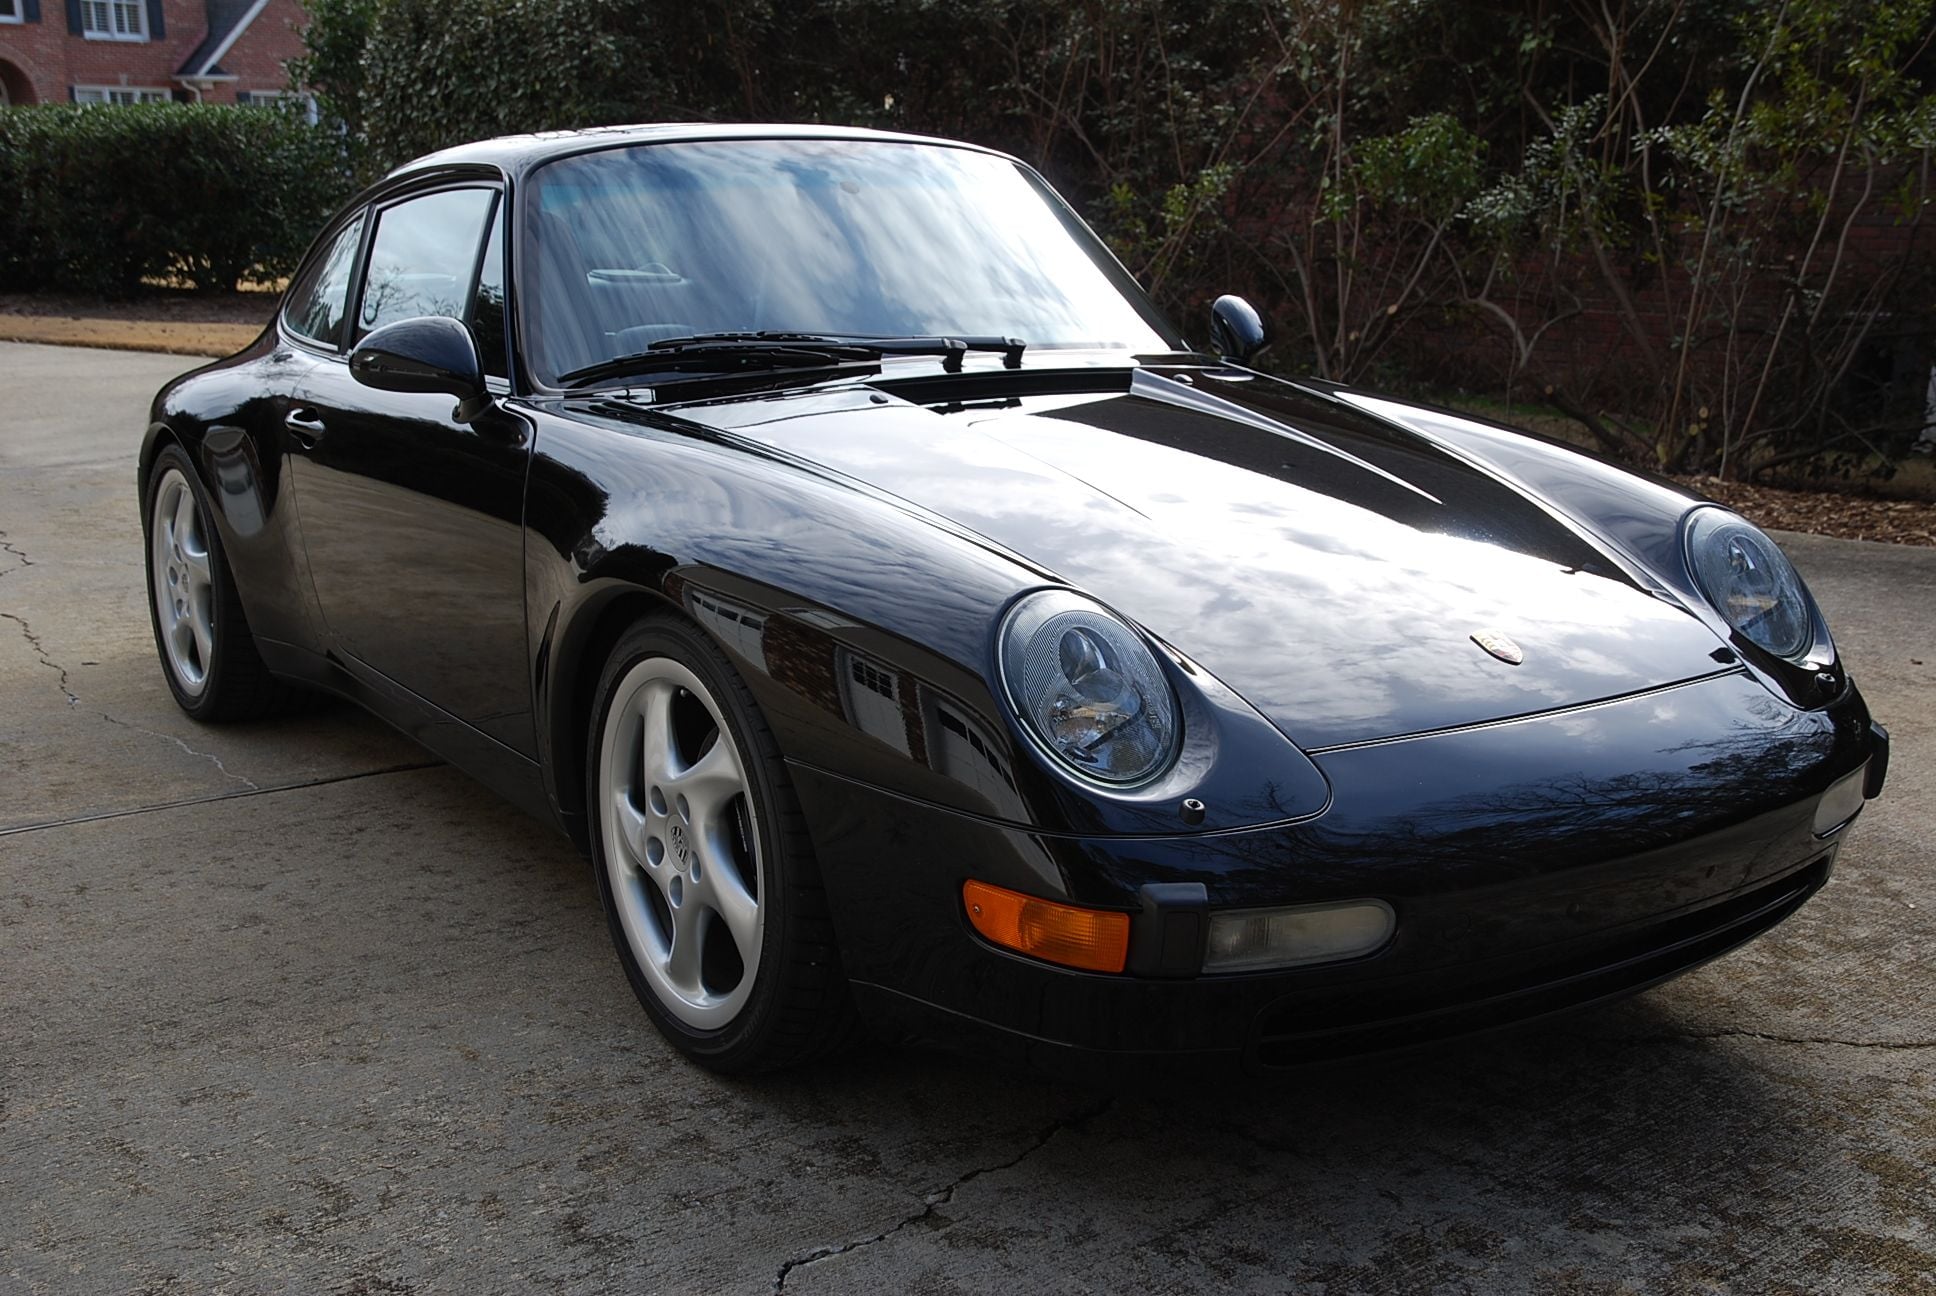 1997 Porsche 911 - 1997 Porsche 911 (993) Coupe, 6-speed, Black/Black, 59K miles - Used - VIN WP0AA2993VS321864 - 59,800 Miles - 6 cyl - 2WD - Manual - Coupe - Black - Birmingham, AL 35242, United States